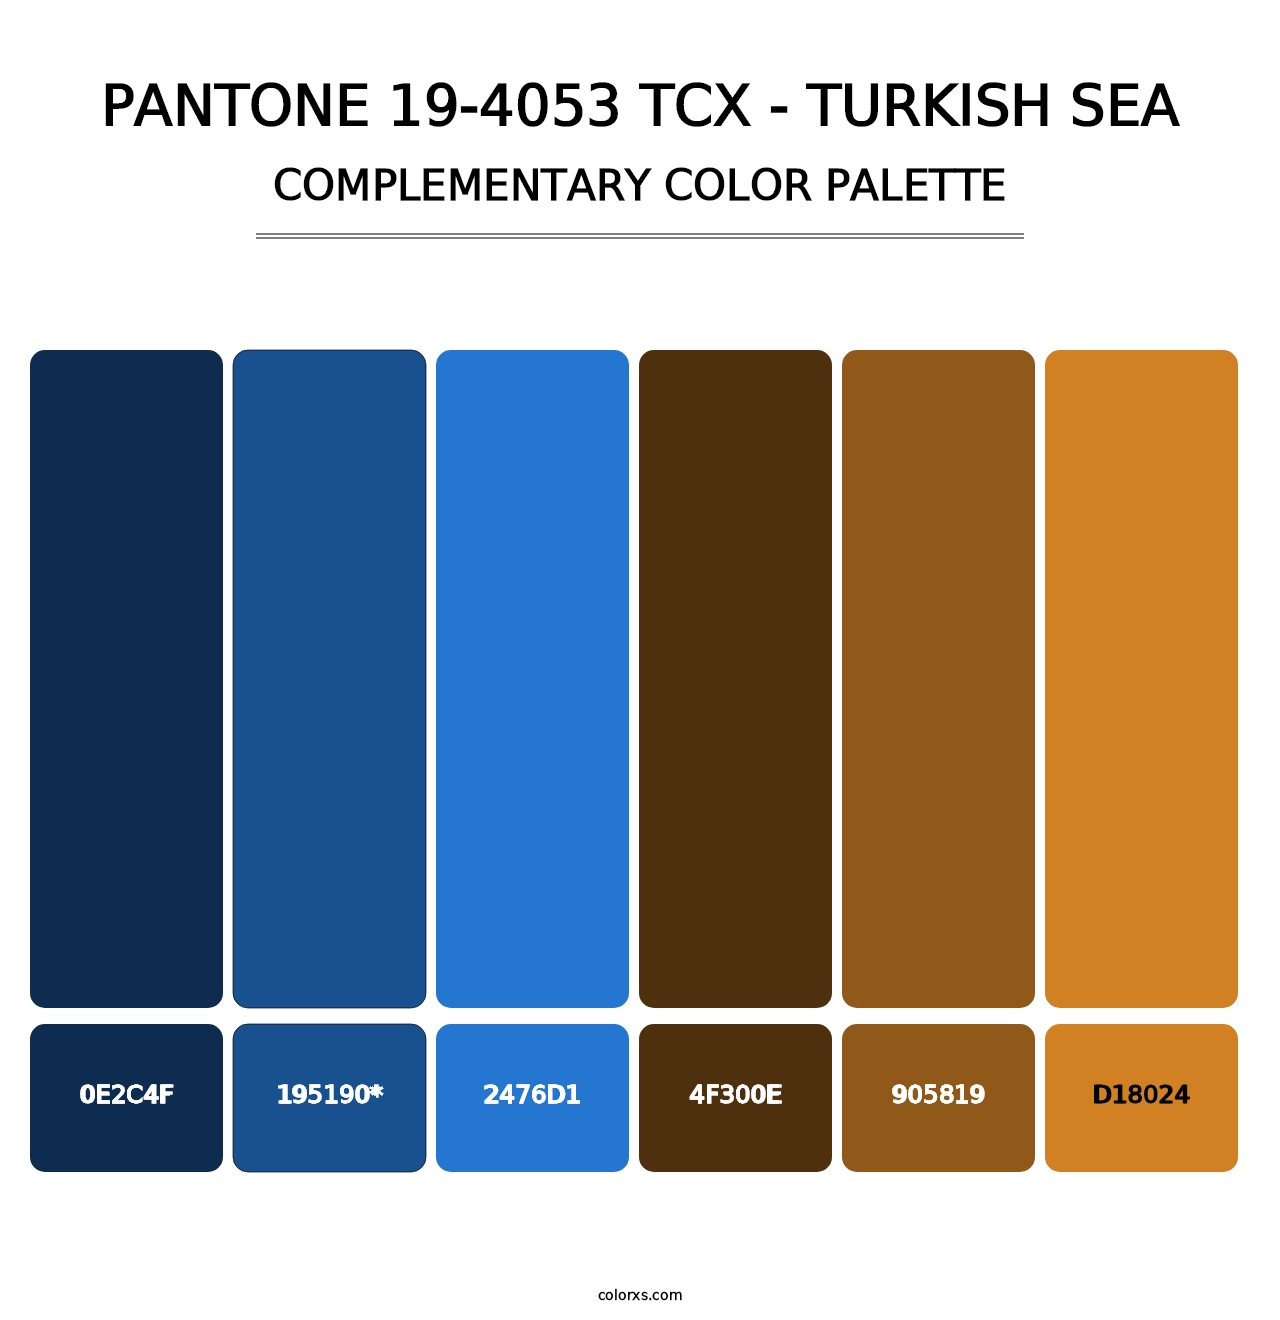 PANTONE 19-4053 TCX - Turkish Sea - Complementary Color Palette